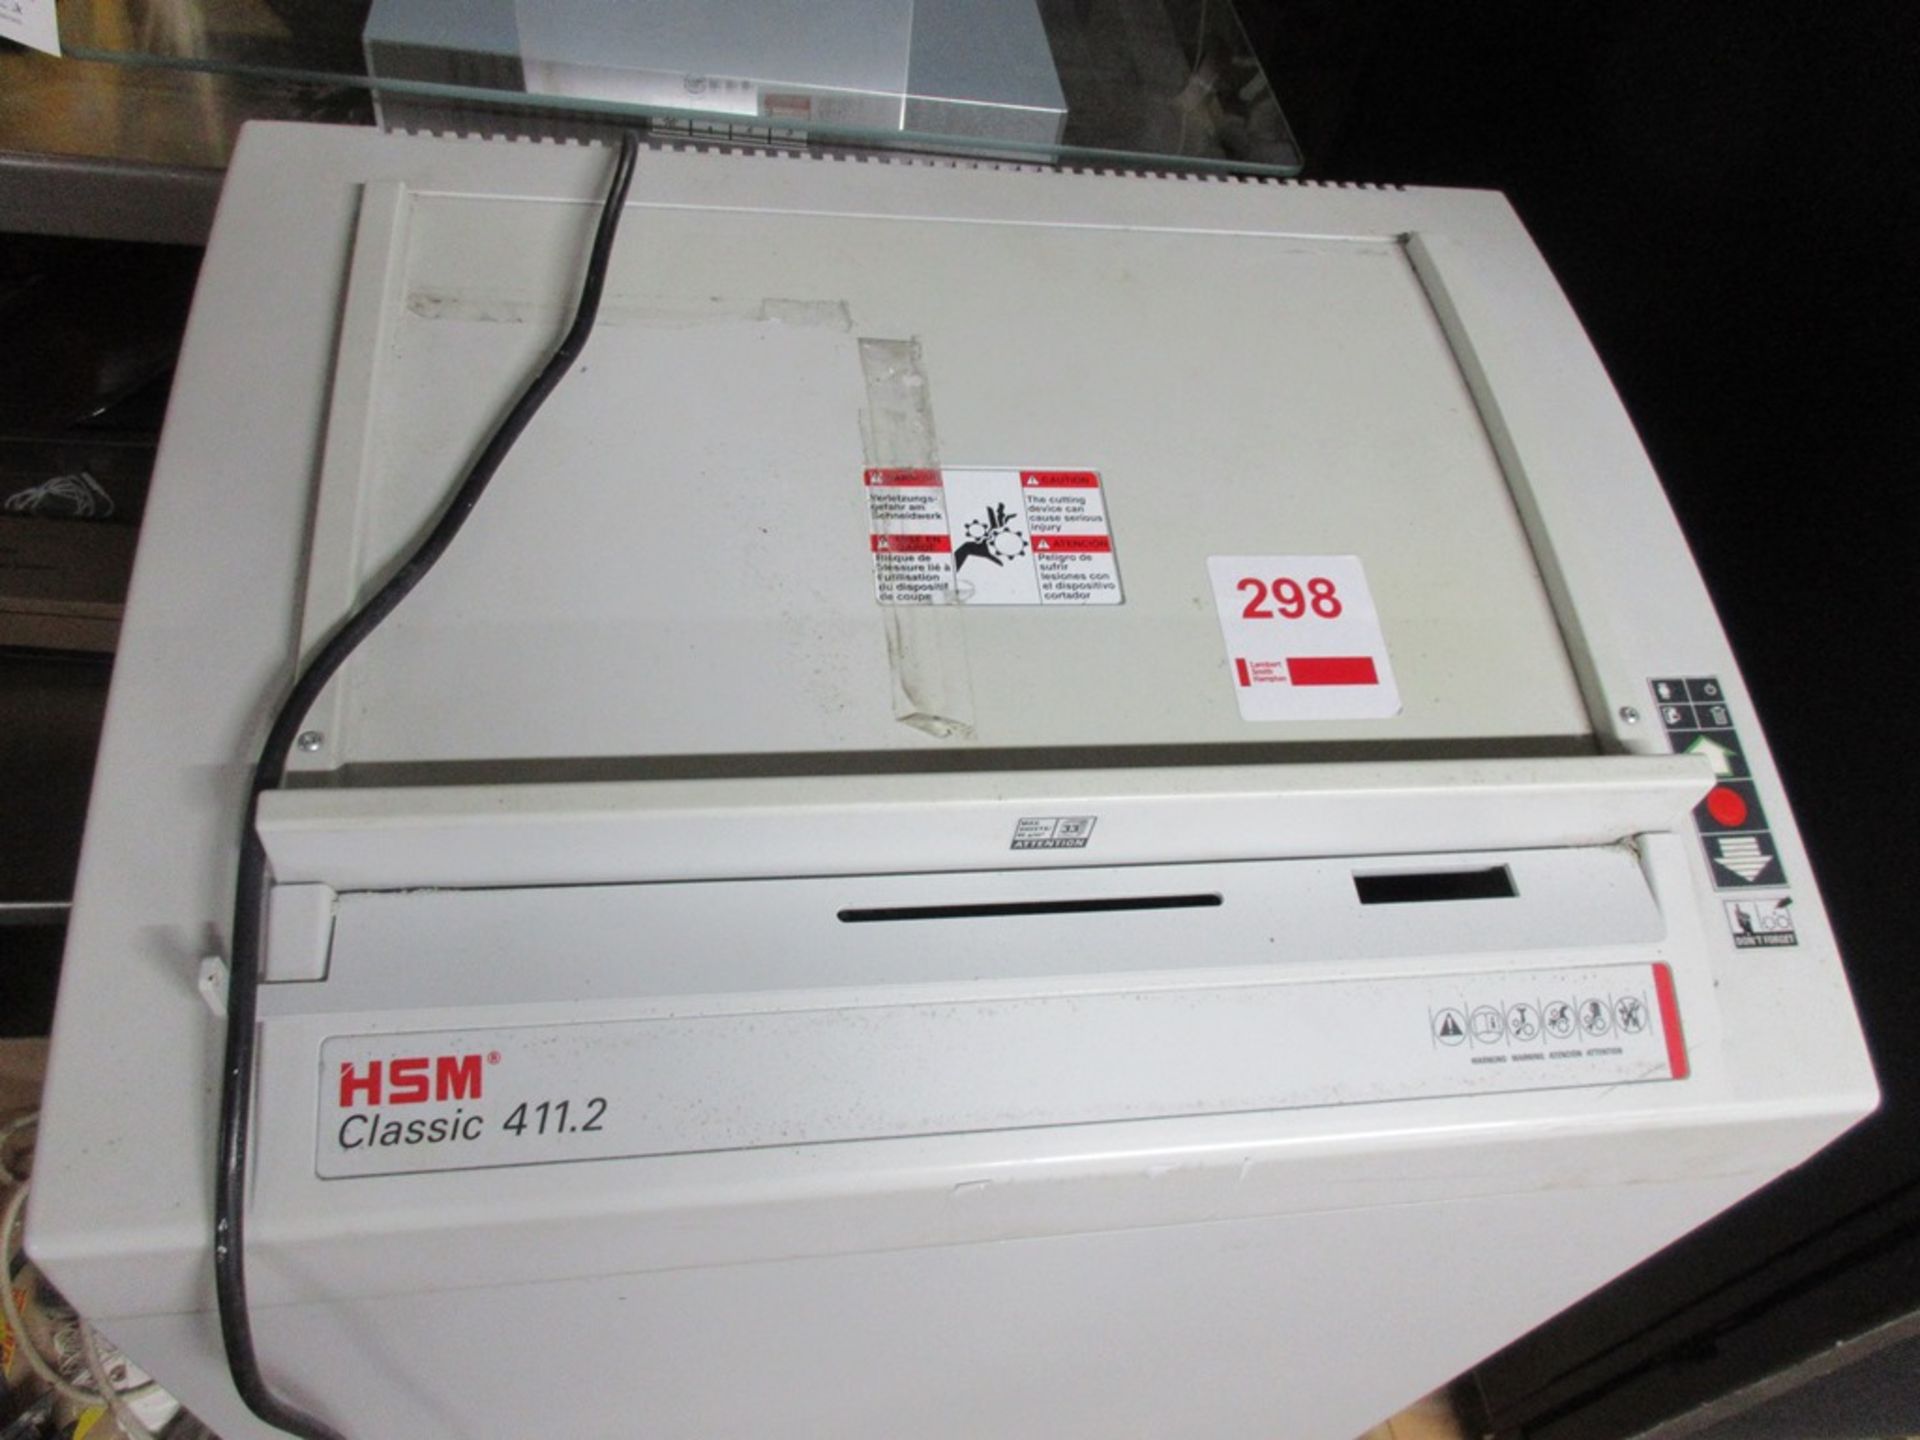 HSM Classic 411.2 shredder